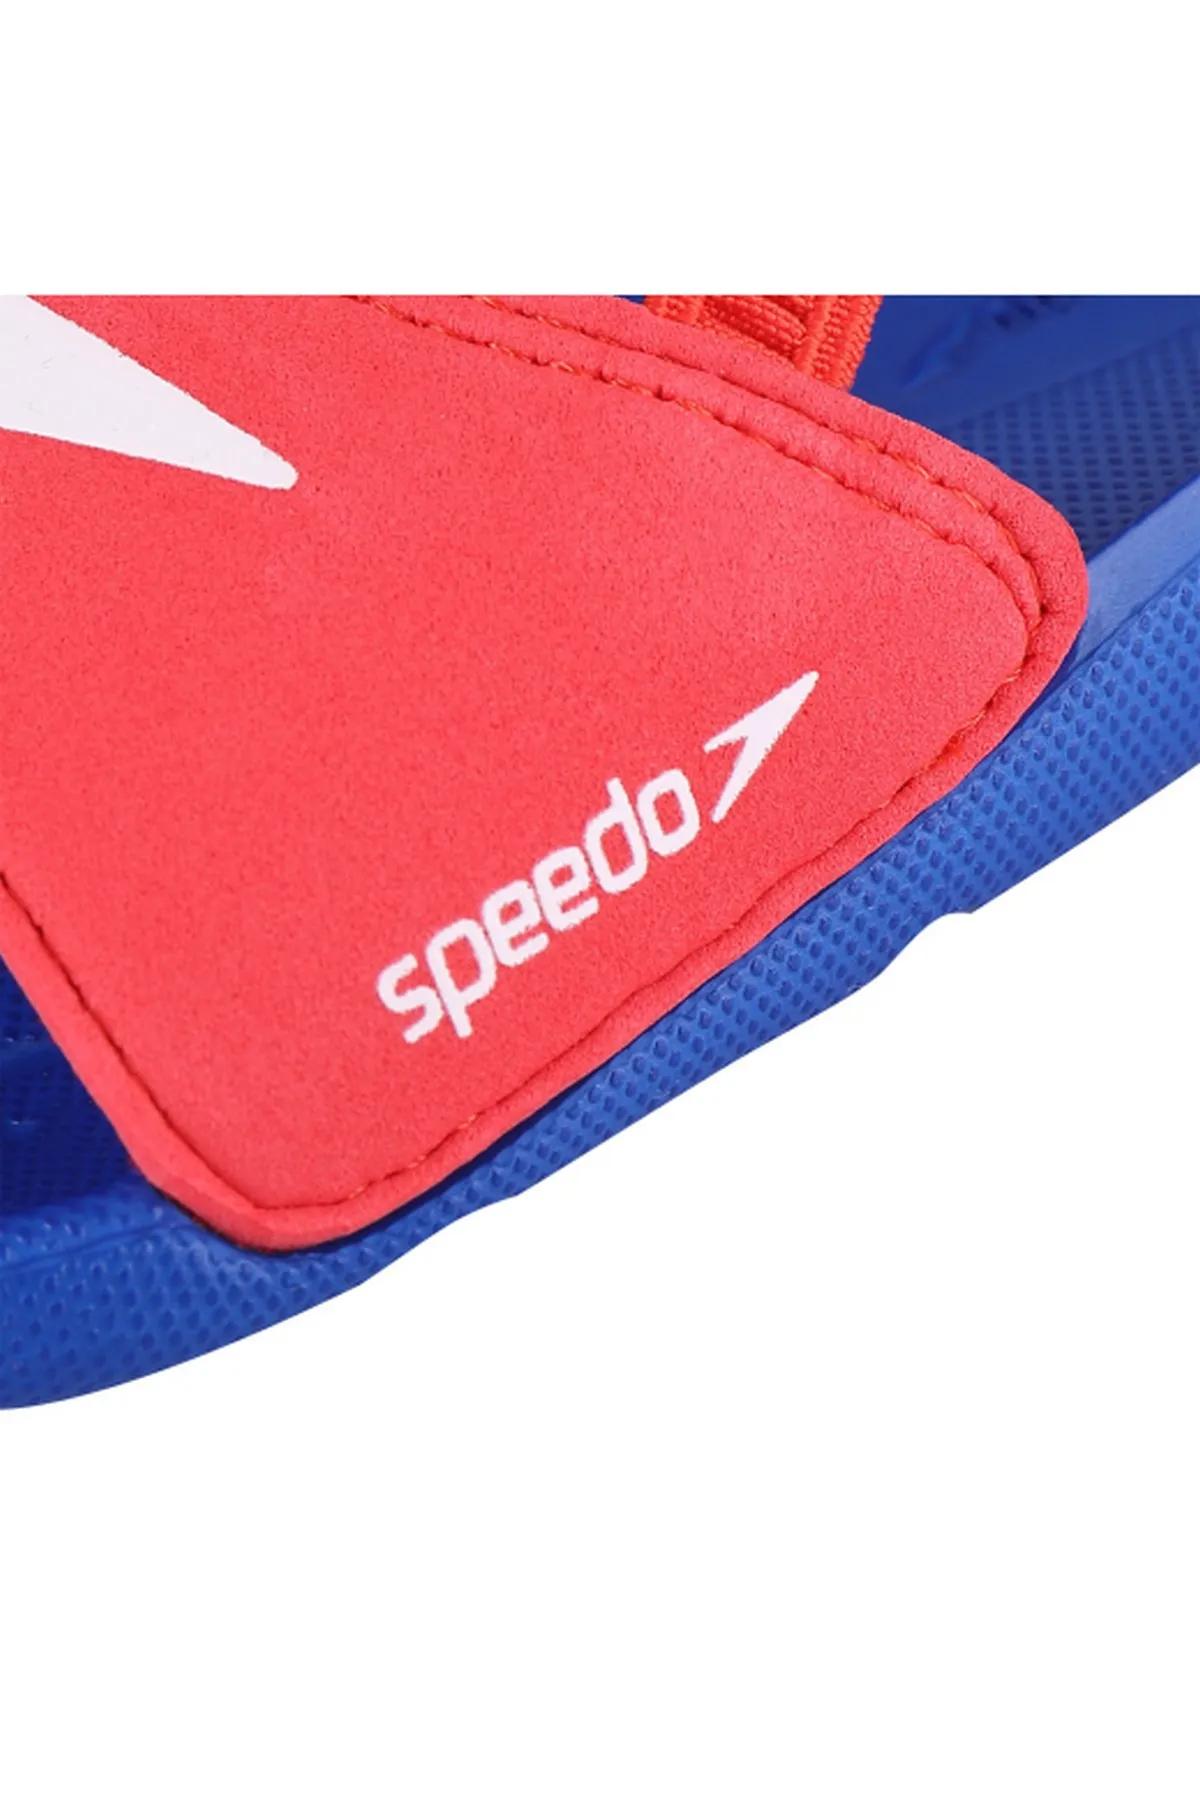 Speedo Sandale ATAMI CORE SLD IM BLUE/RED 